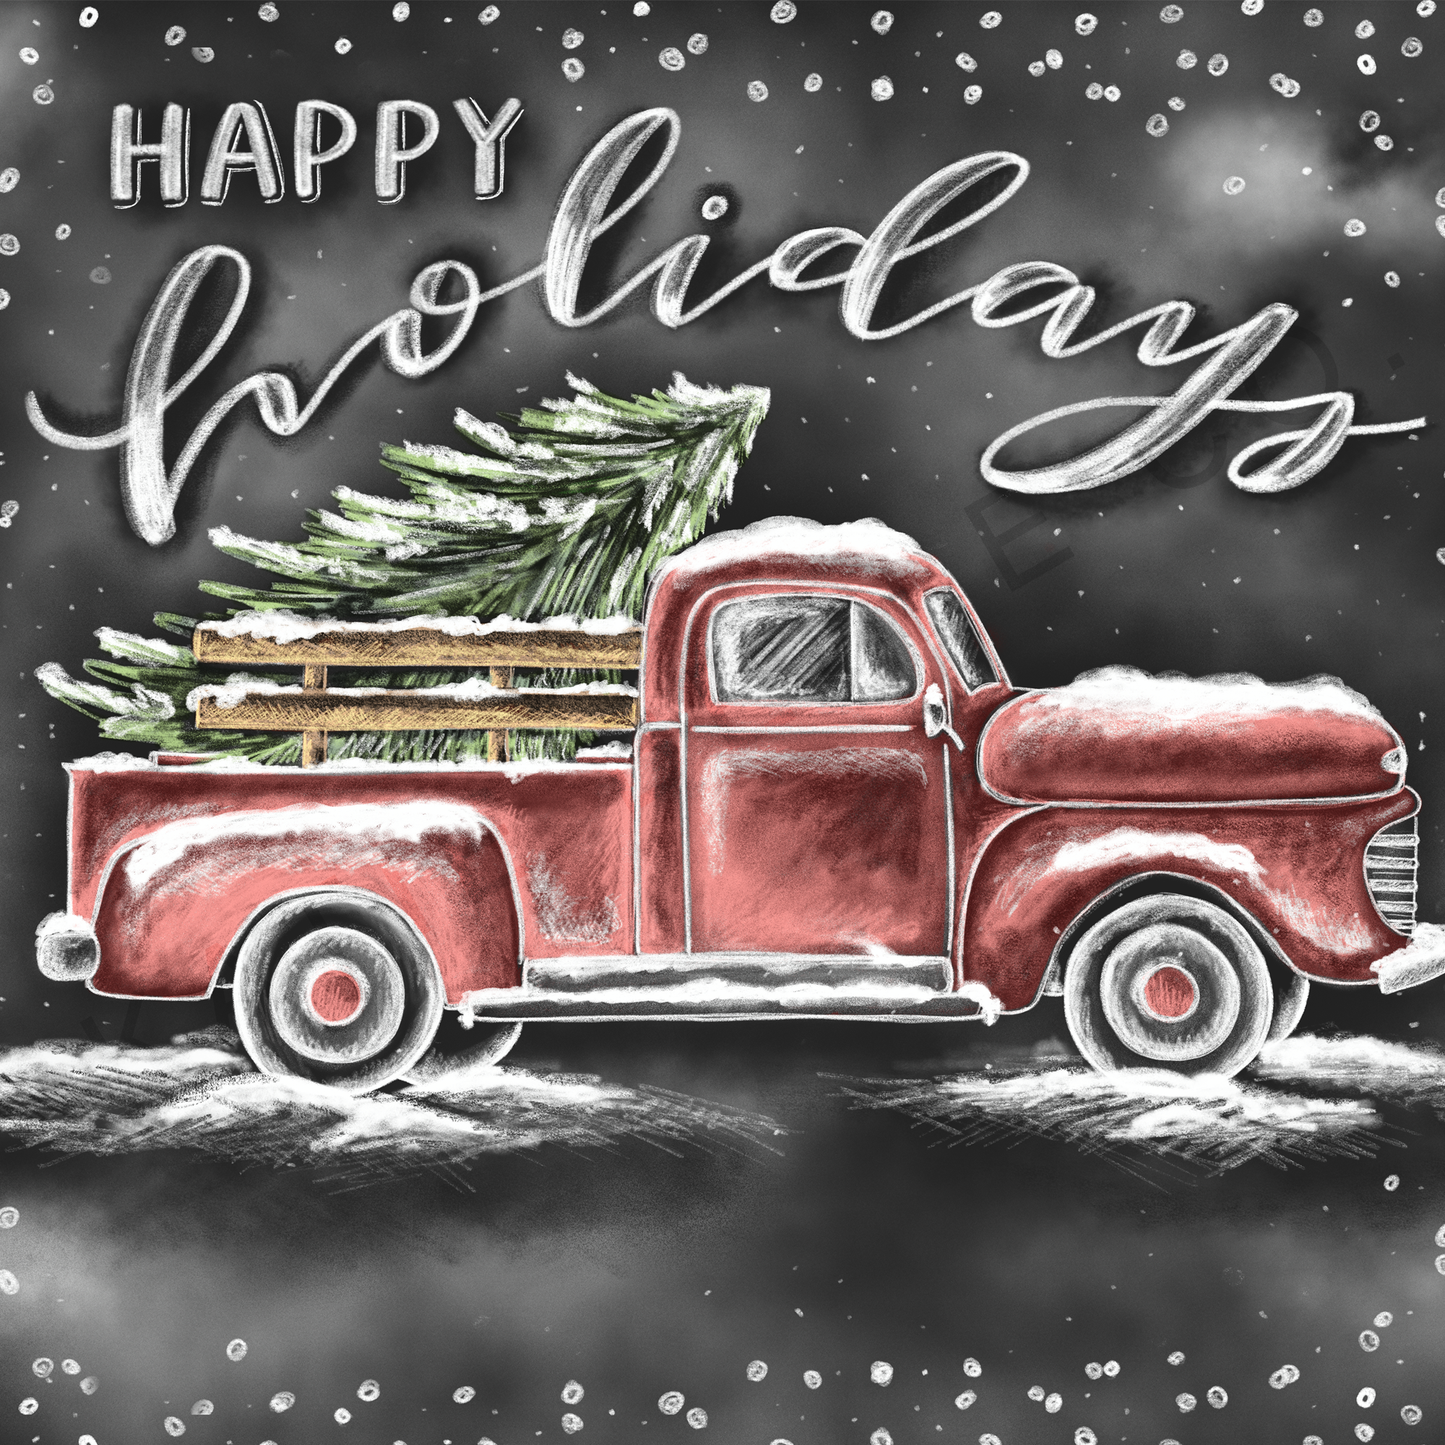 Snowy Holiday Truck. Vintage Red Truck. Happy Holidays. Chalkboard Art. Katie Belle Co. Christmas Decor. Christmas Artwork. Holiday Home Decor. Christmas Tree. Seasonal Artwork